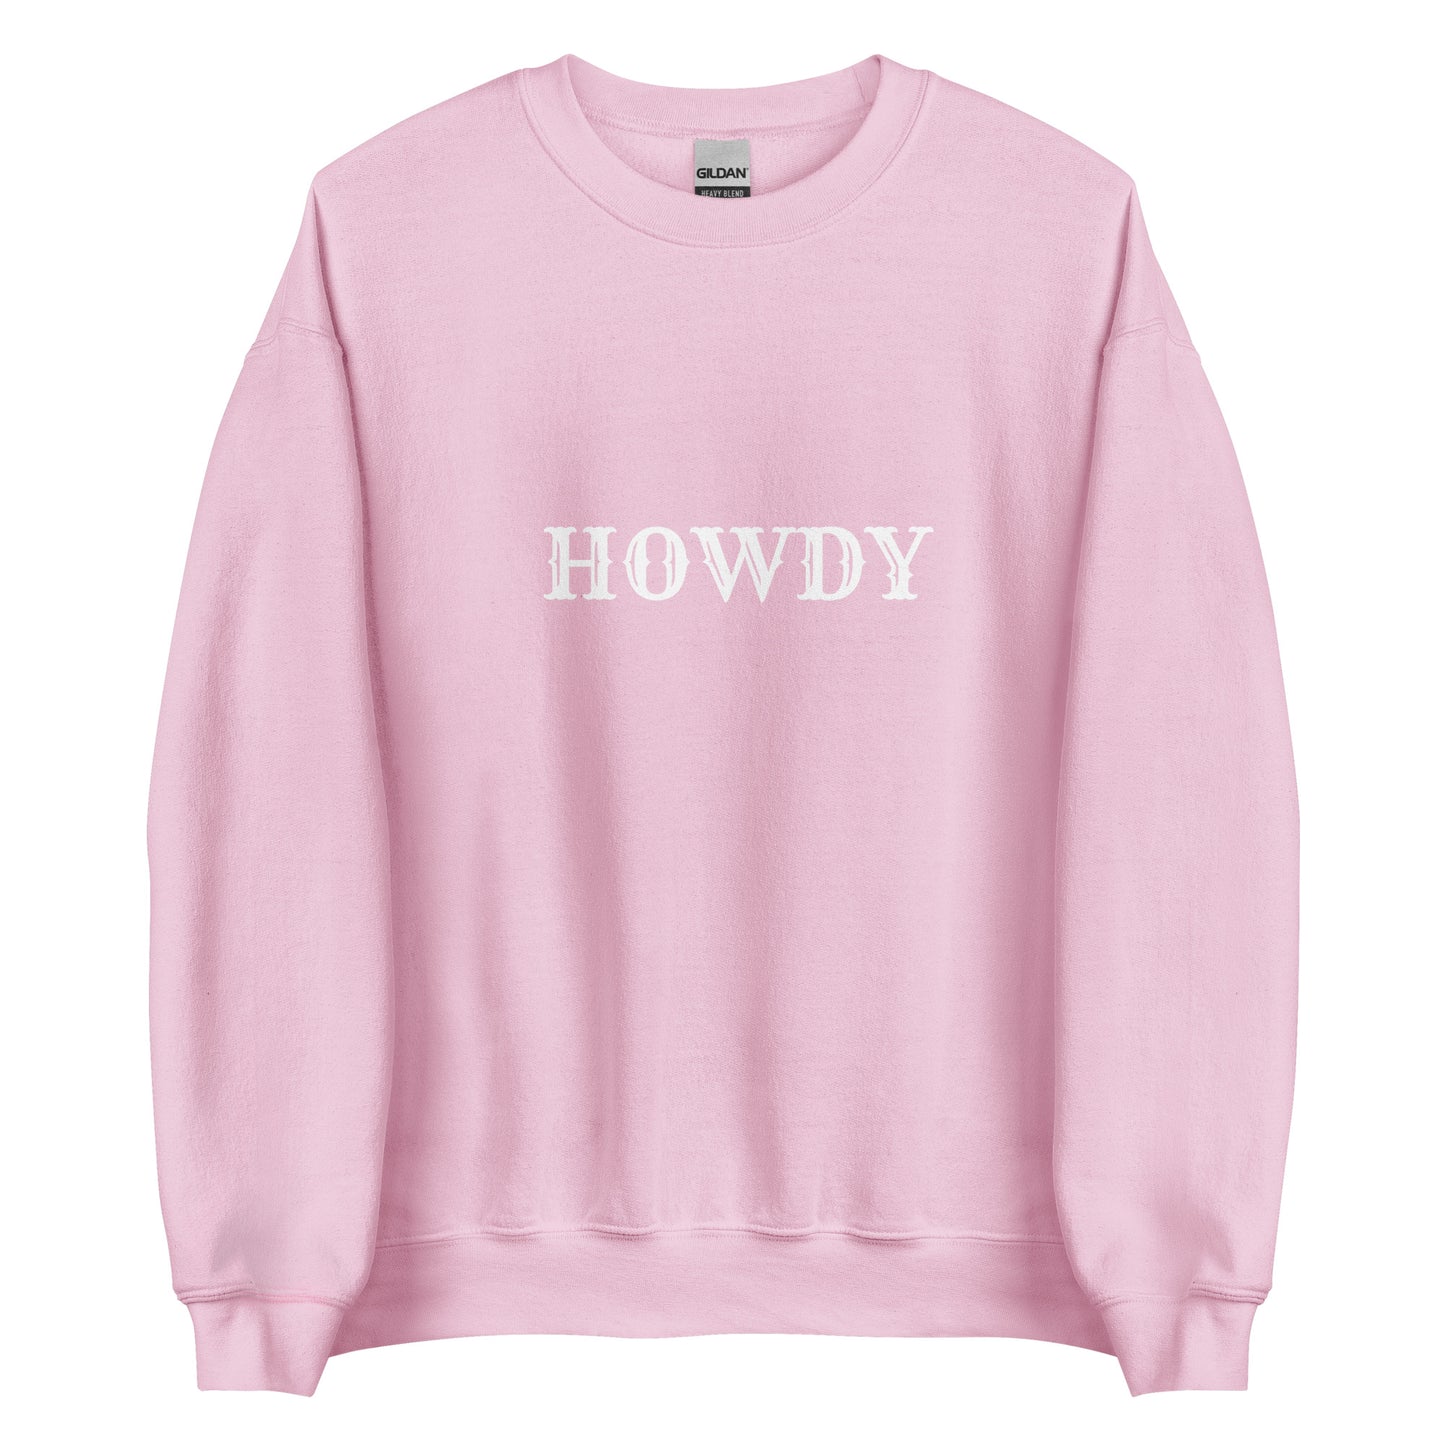 Howdy Unisex Sweatshirt